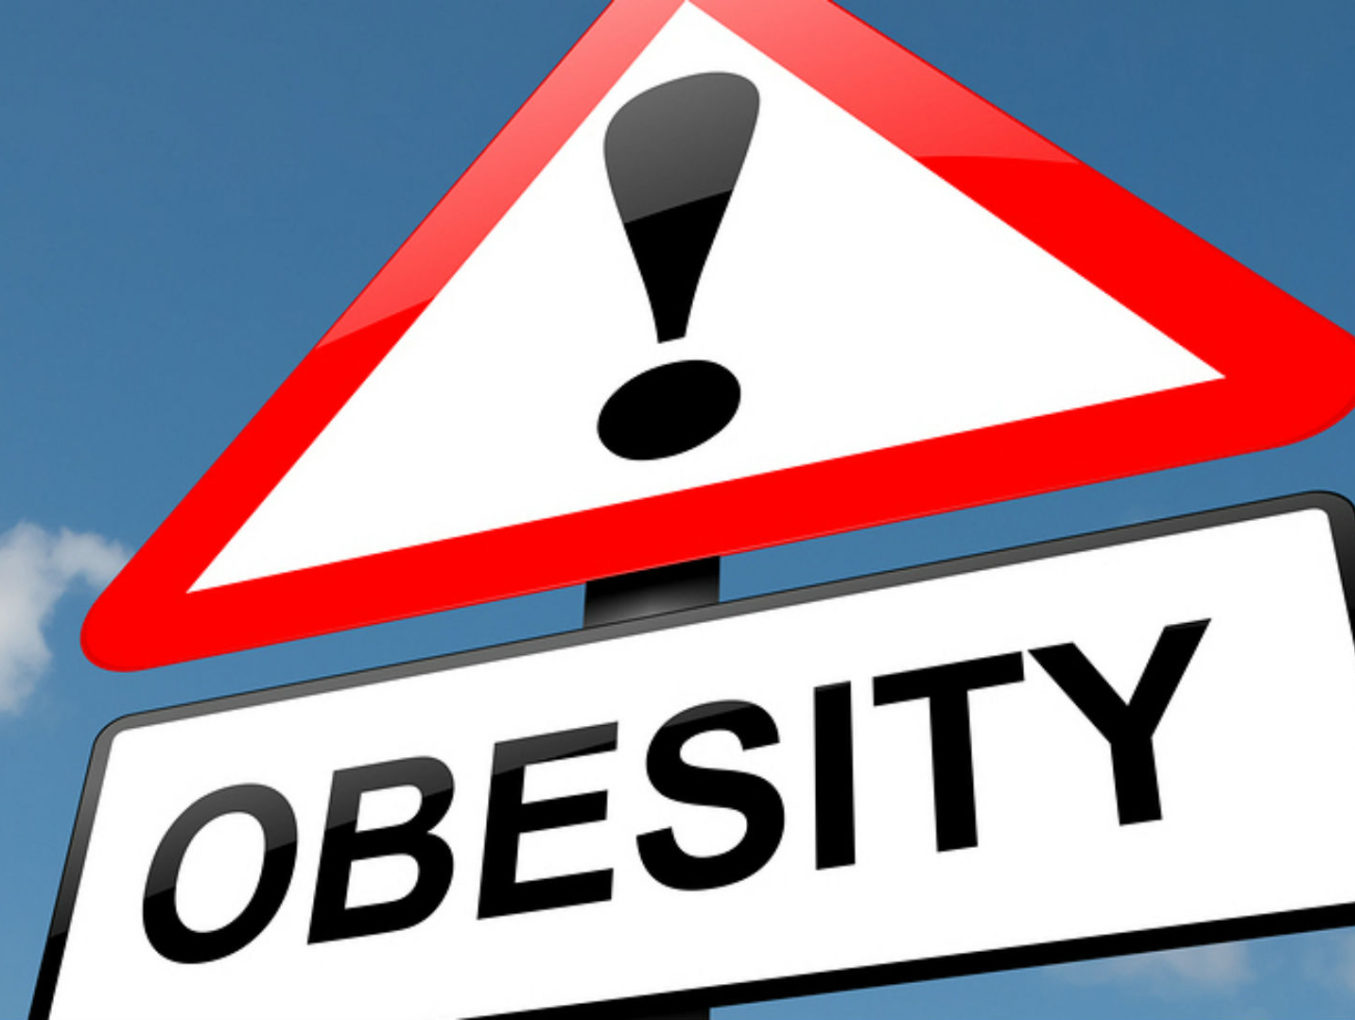 Obesity Health Risks